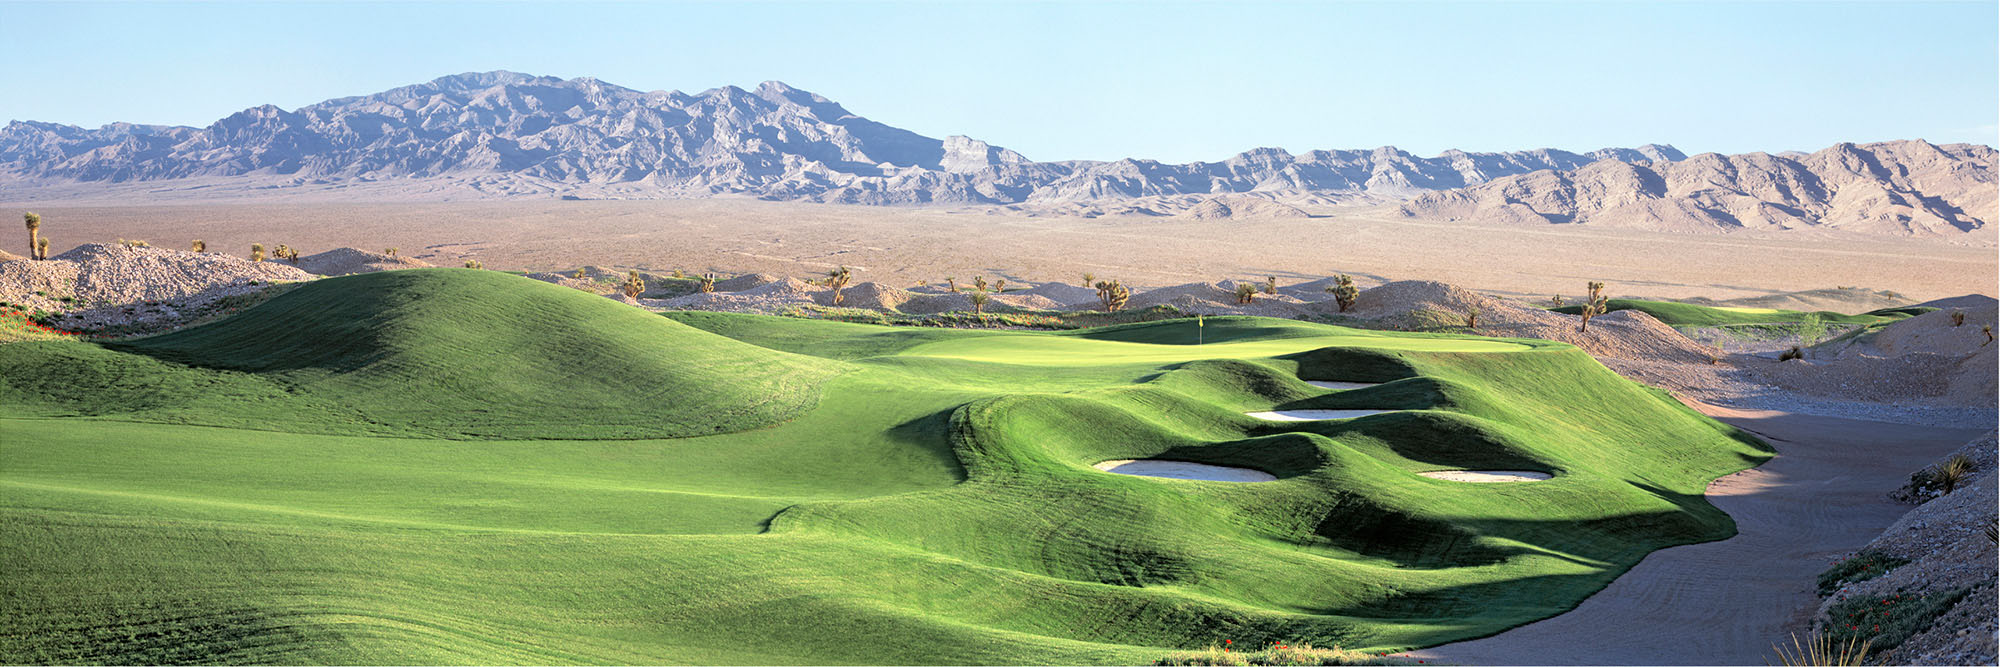 Golf Course Image - Las Vegas Paiute Wolf No. 8